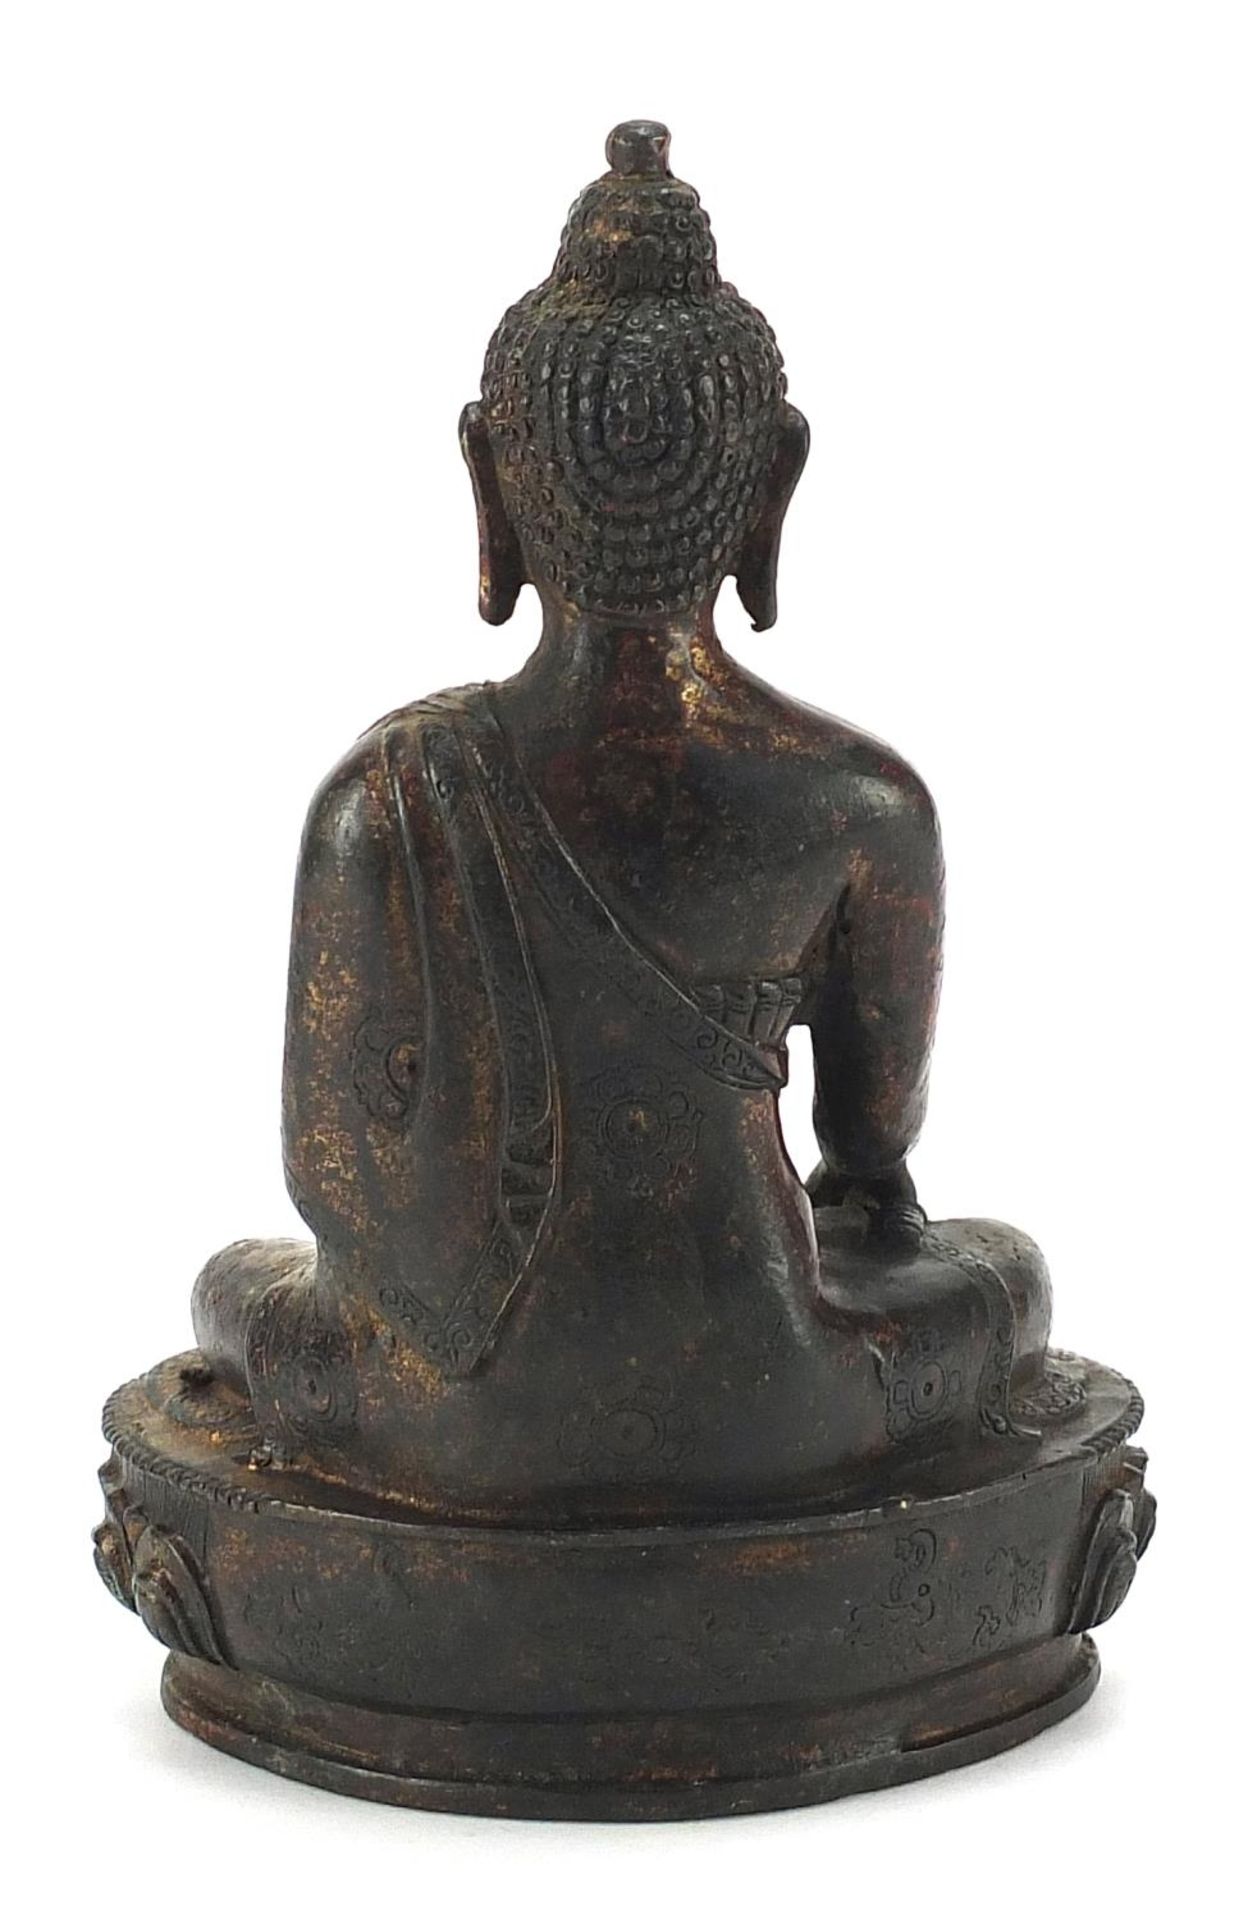 Chino Tibetan patinated bronze figure of a deity, 20cm high - Image 2 of 3